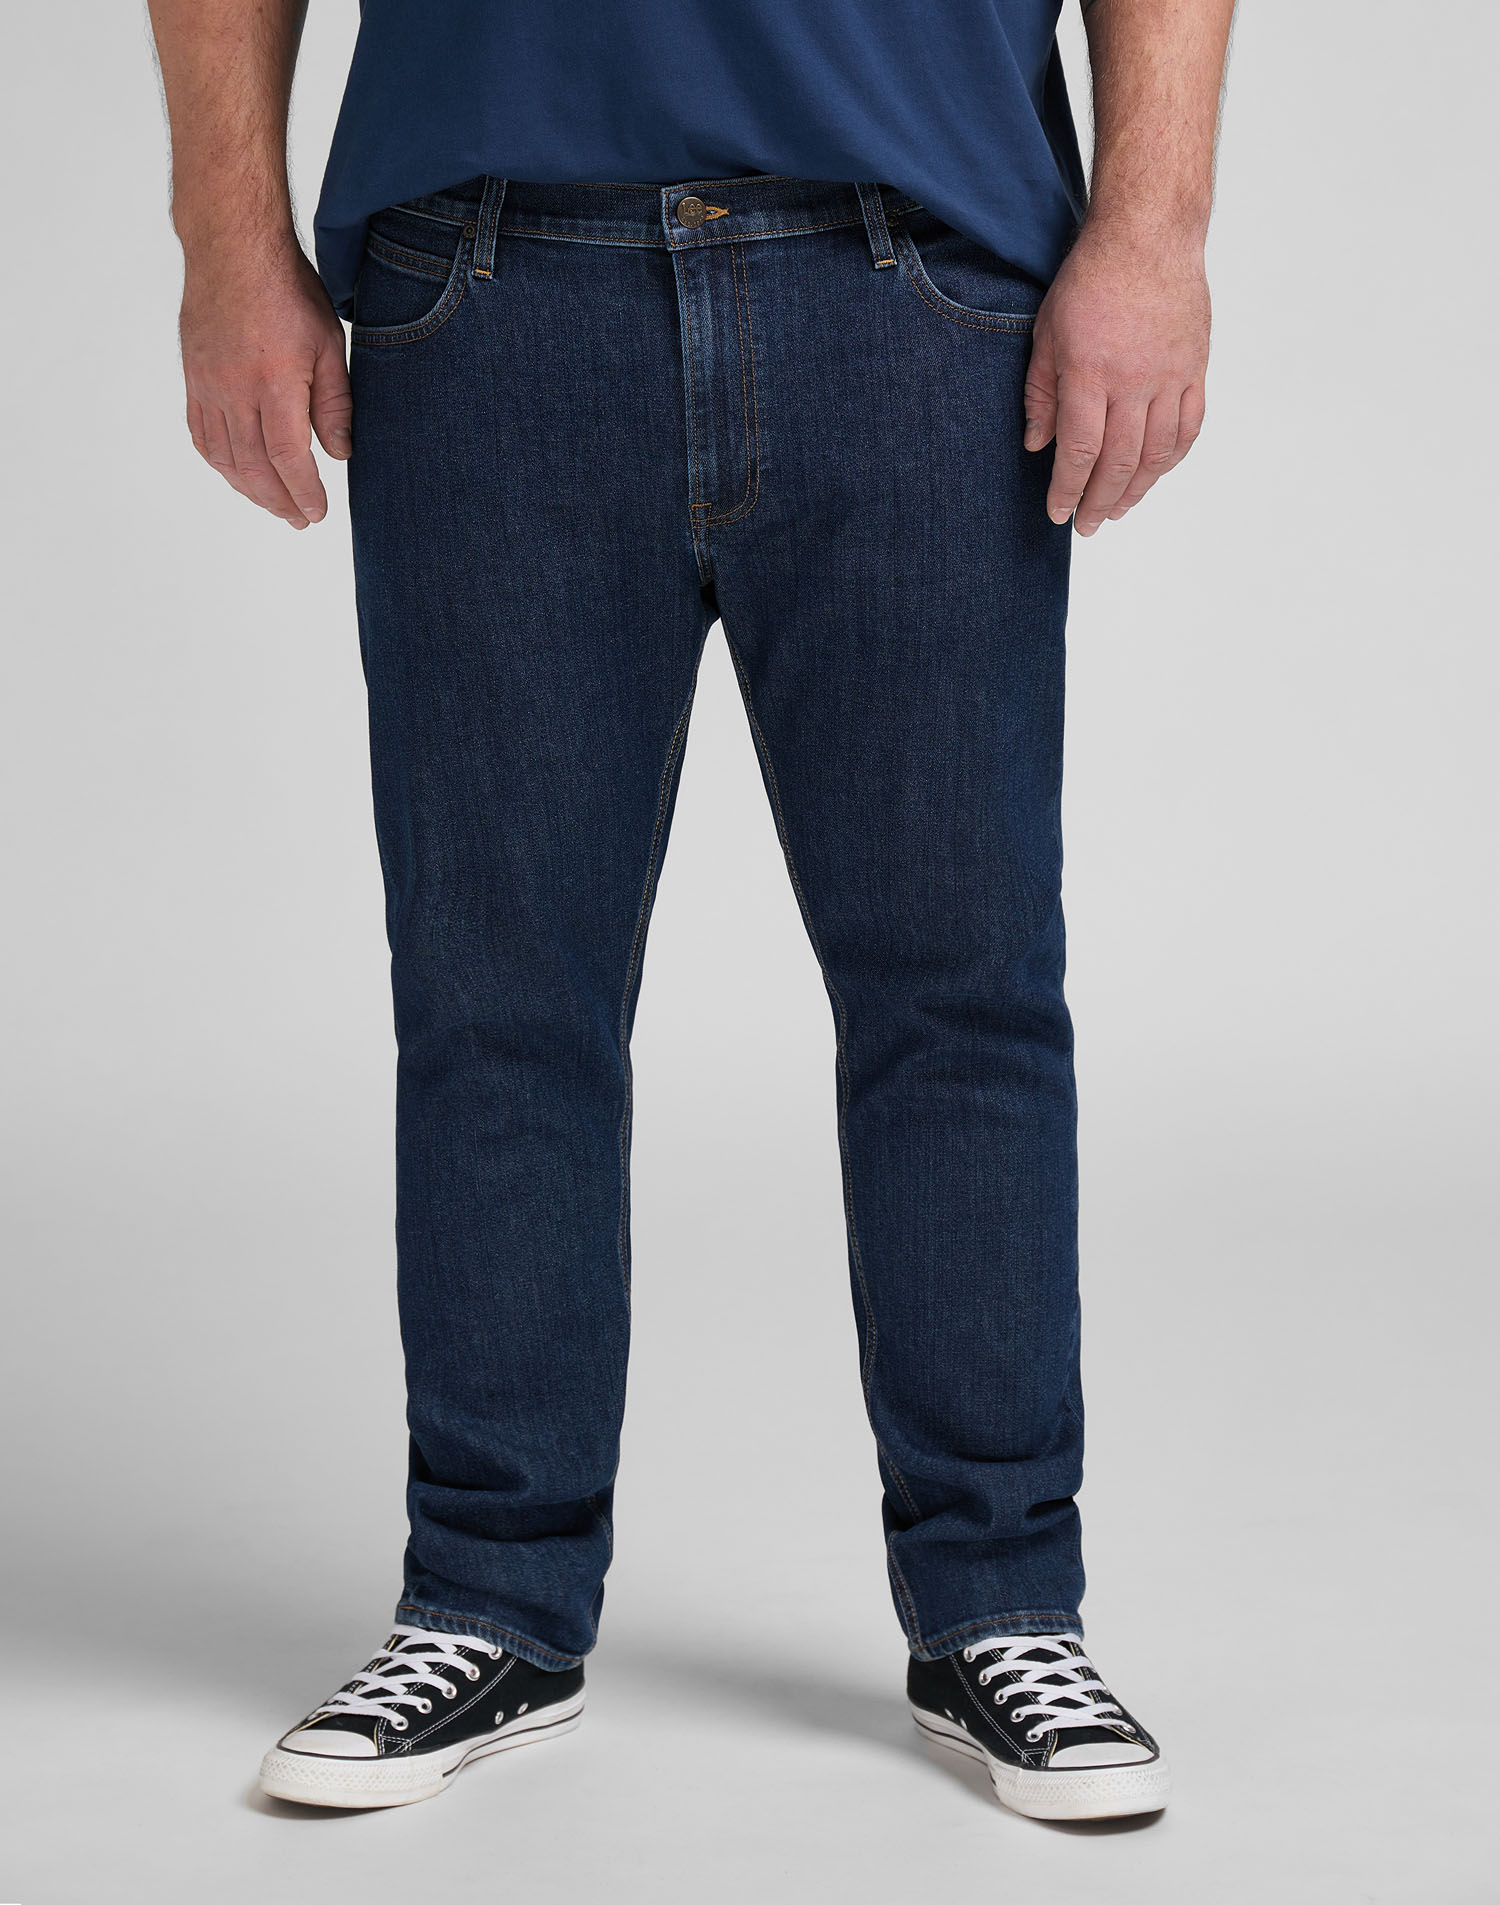 Lee Daren zip regular pantalons texans d'home L707MG46 blau fosc